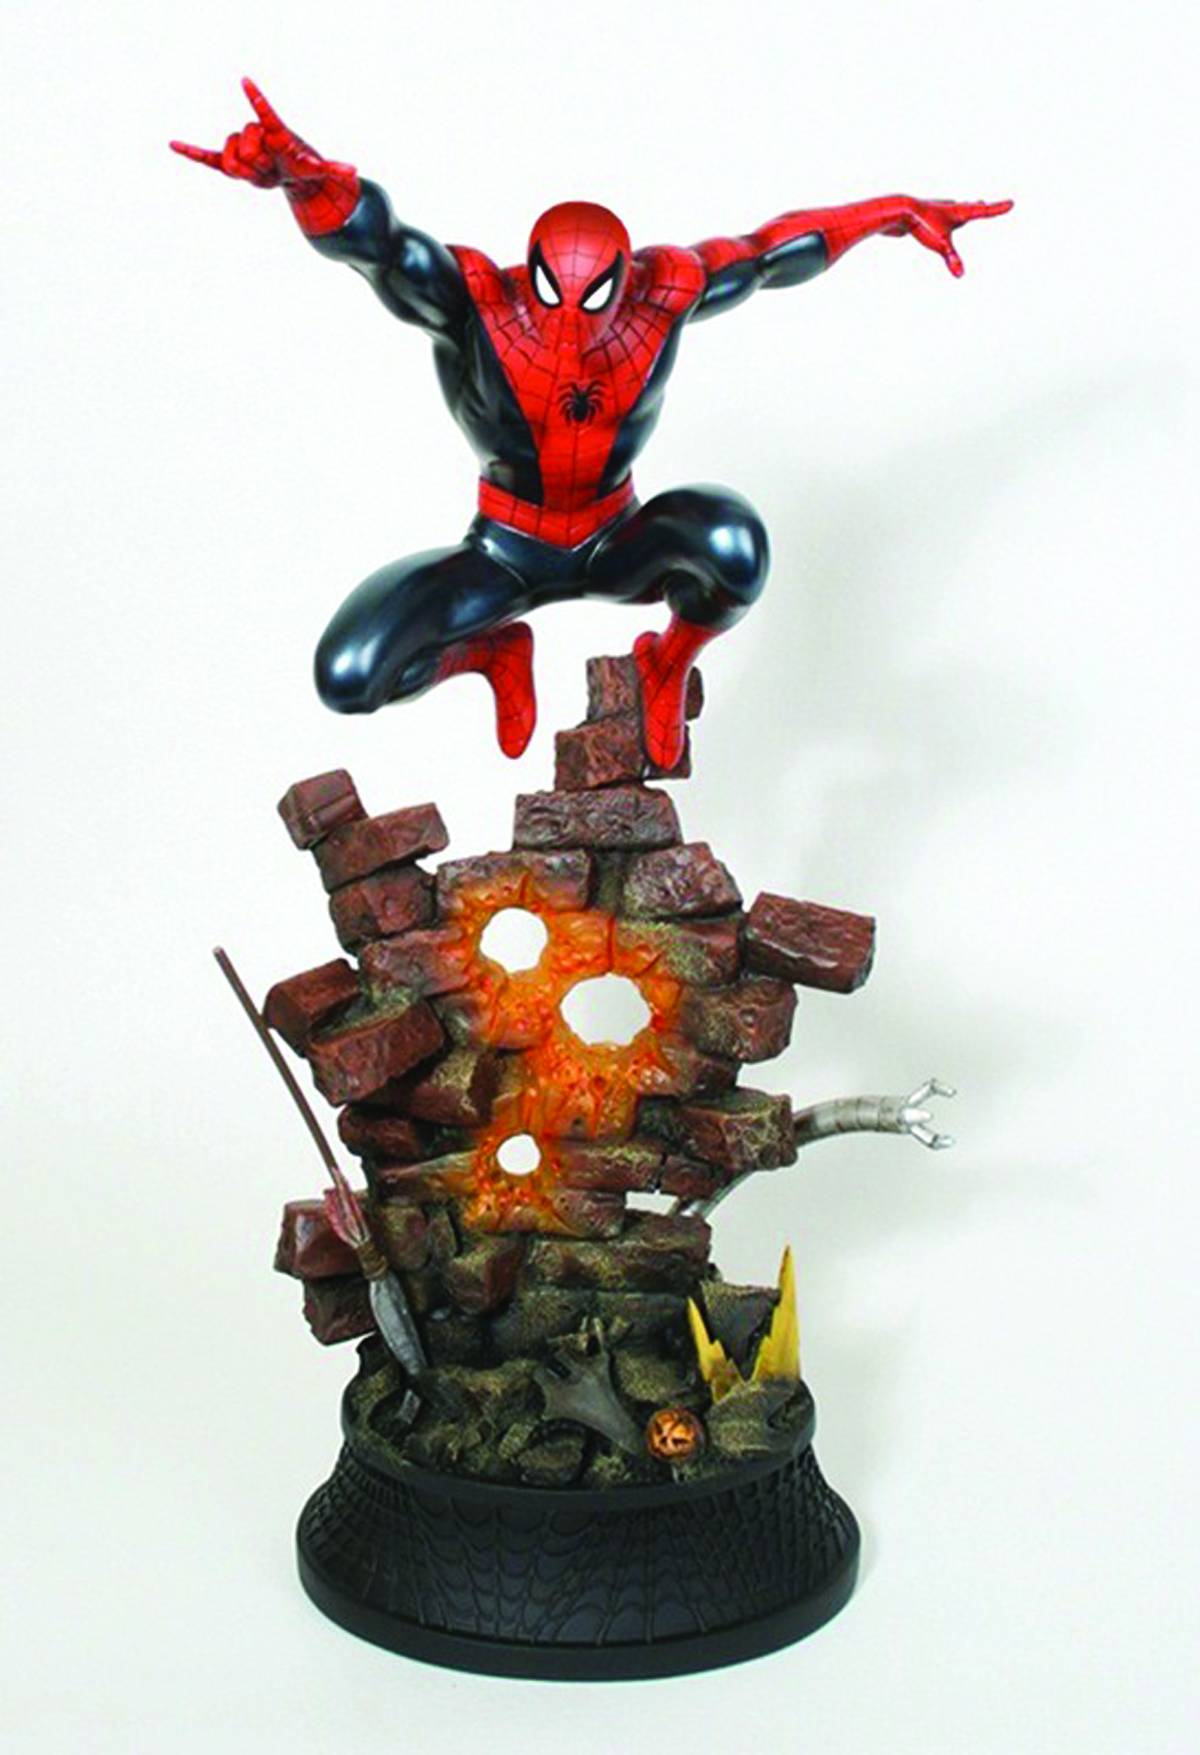 Spider-Man Action Statue by Bowen Designs